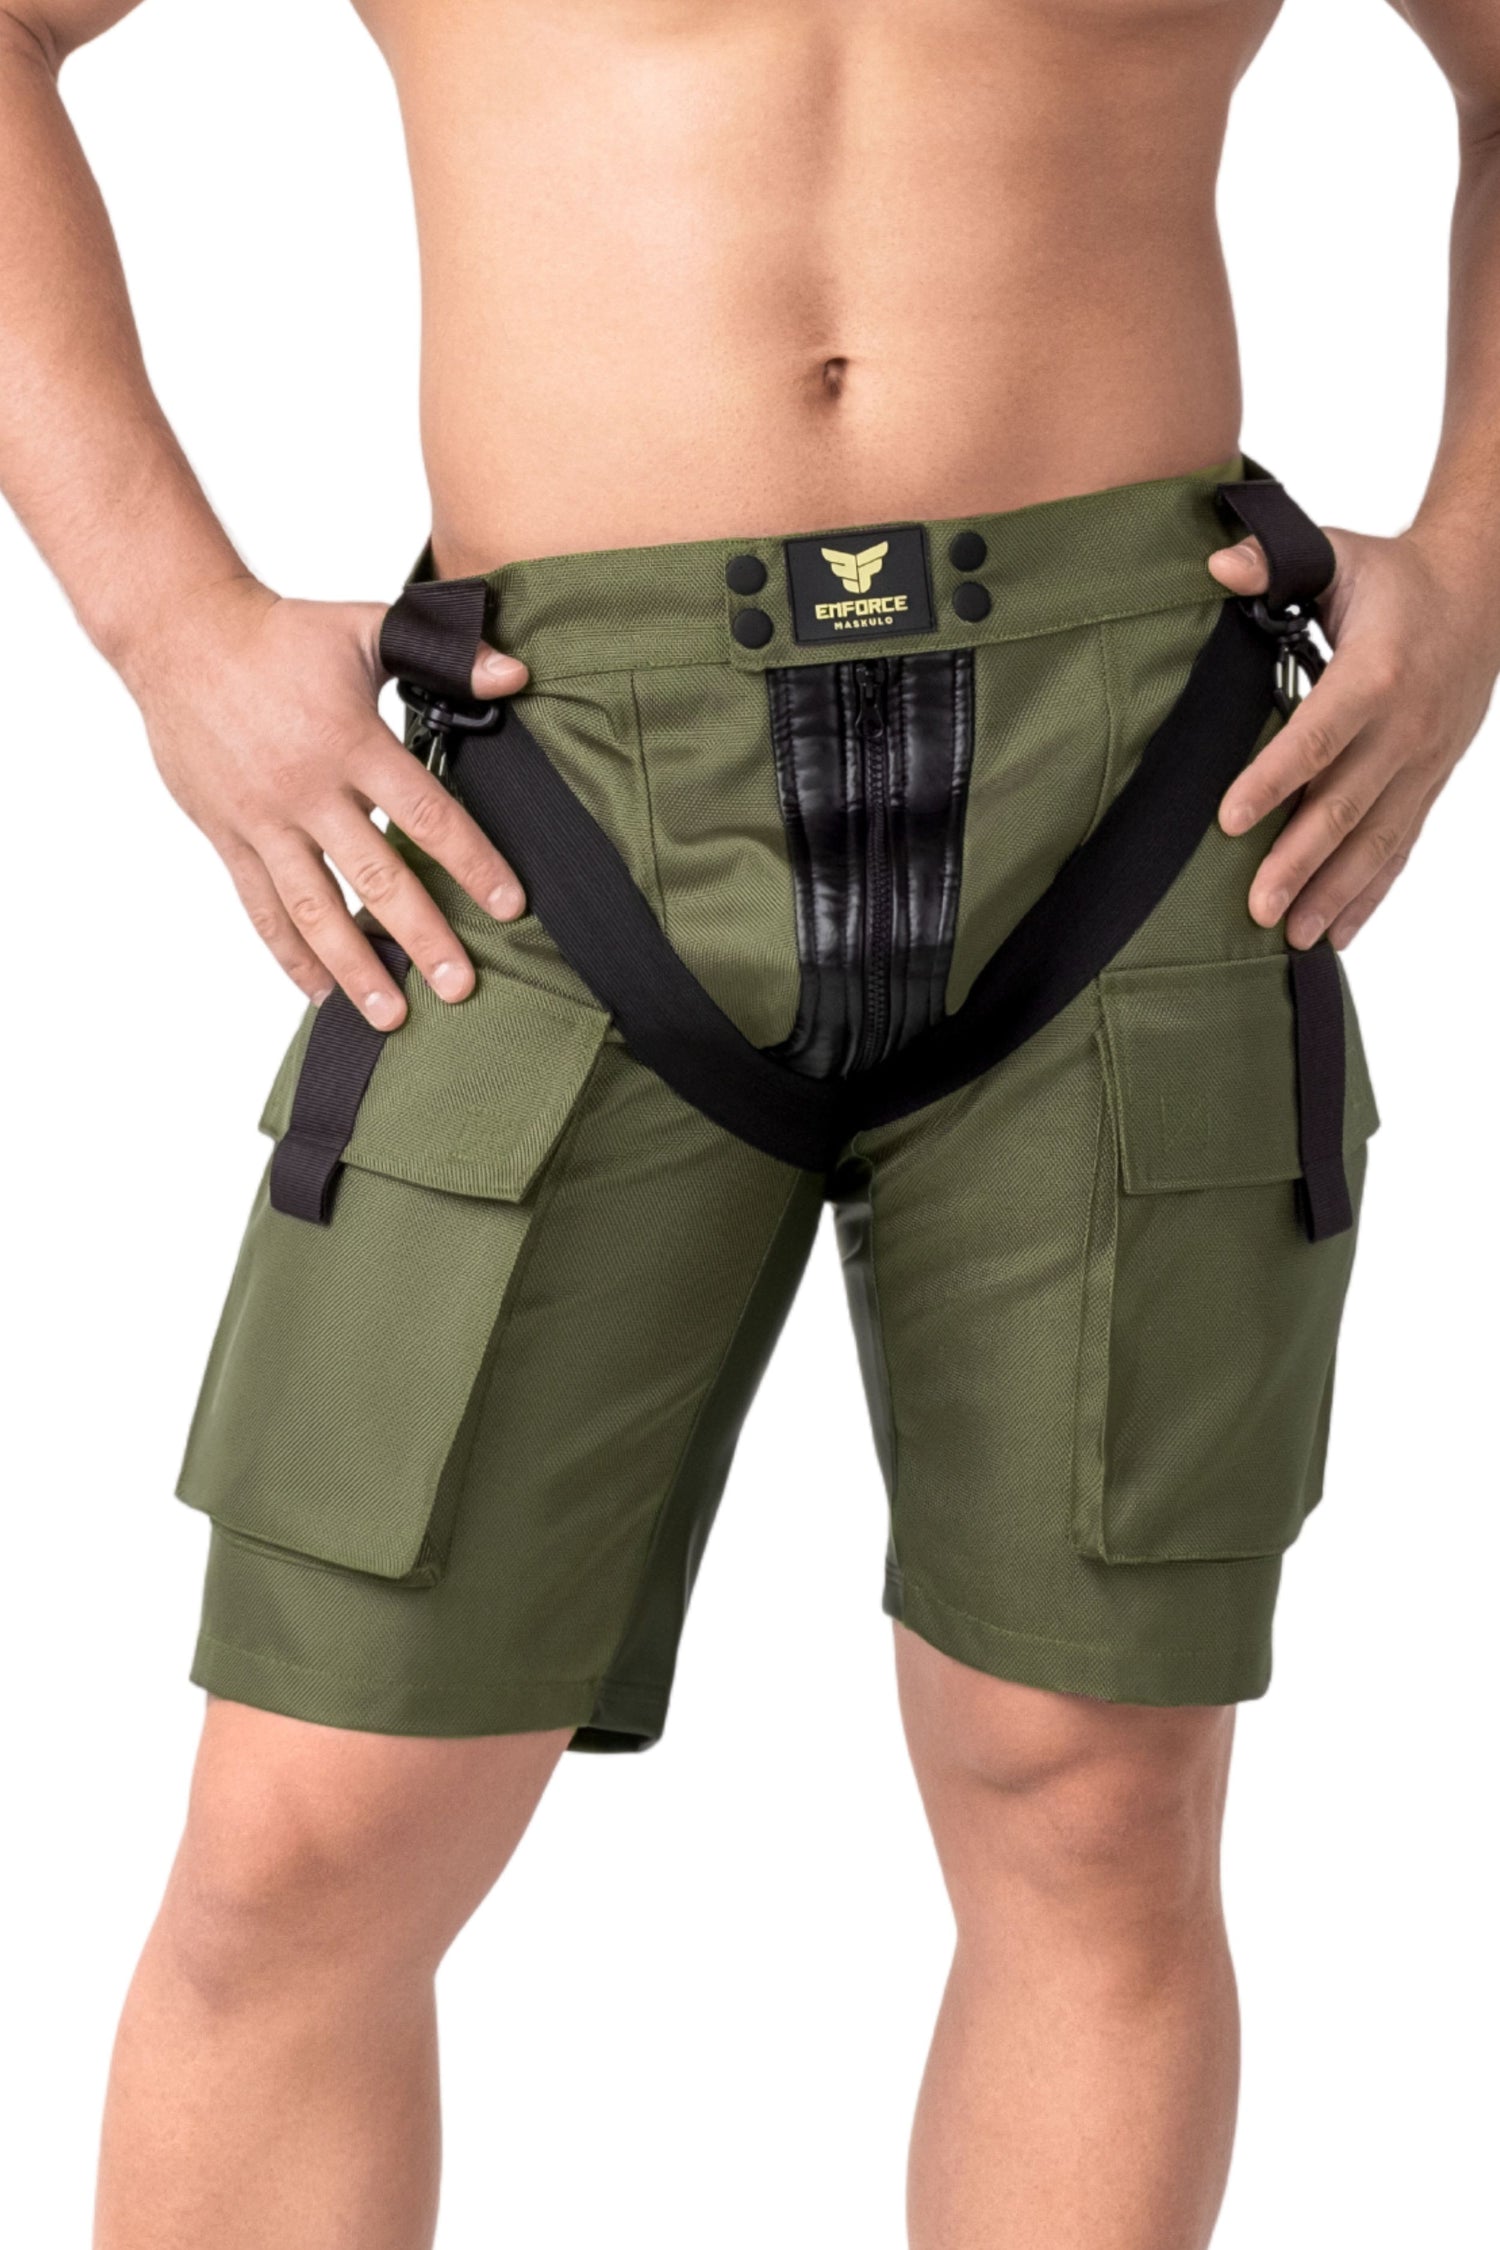 Hawk Enforce Zip Shorts